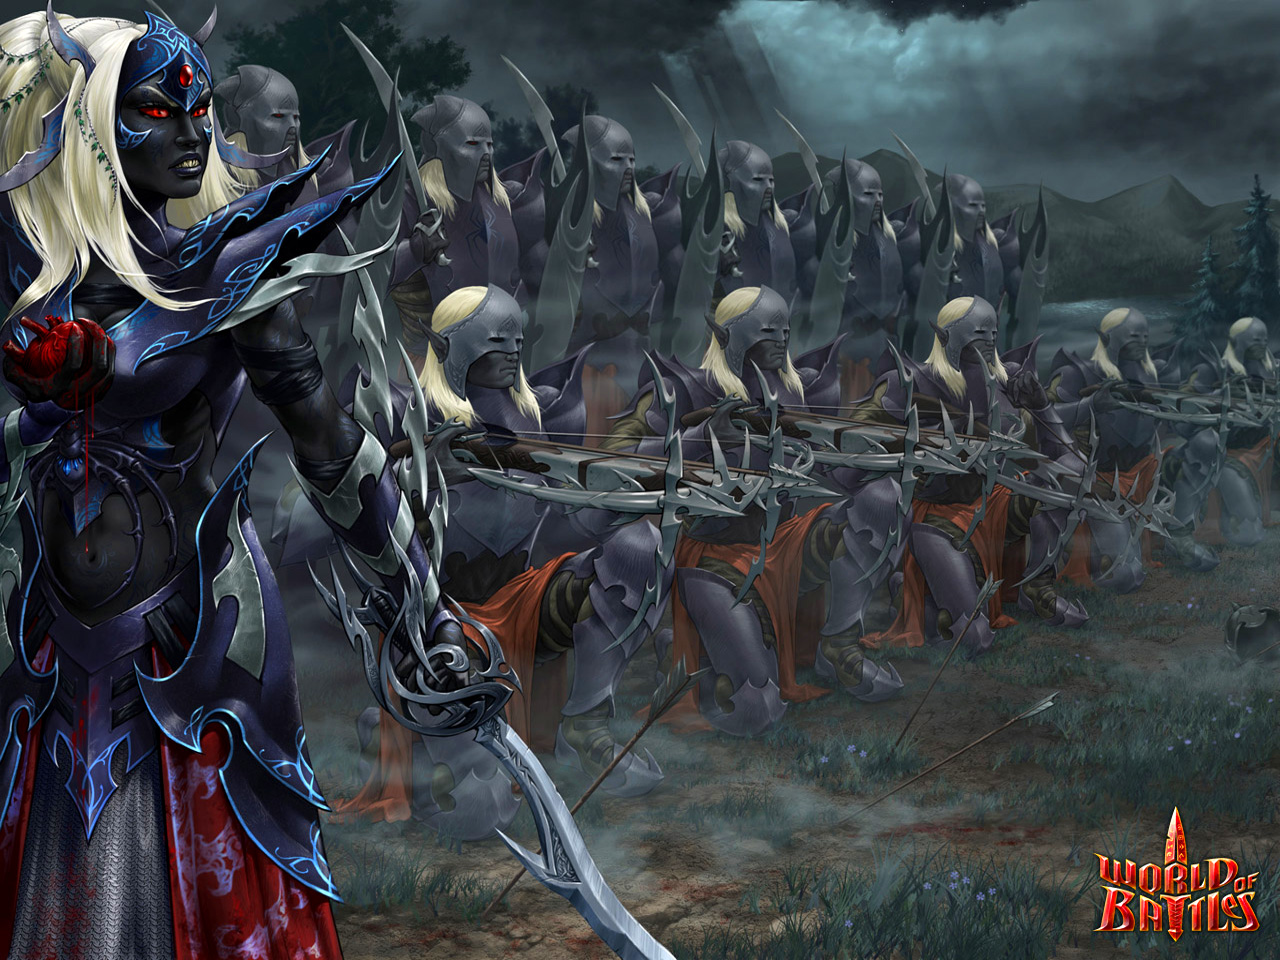 World Of Battles Dark Elves X 960pix Wallpaper Fantasy Art